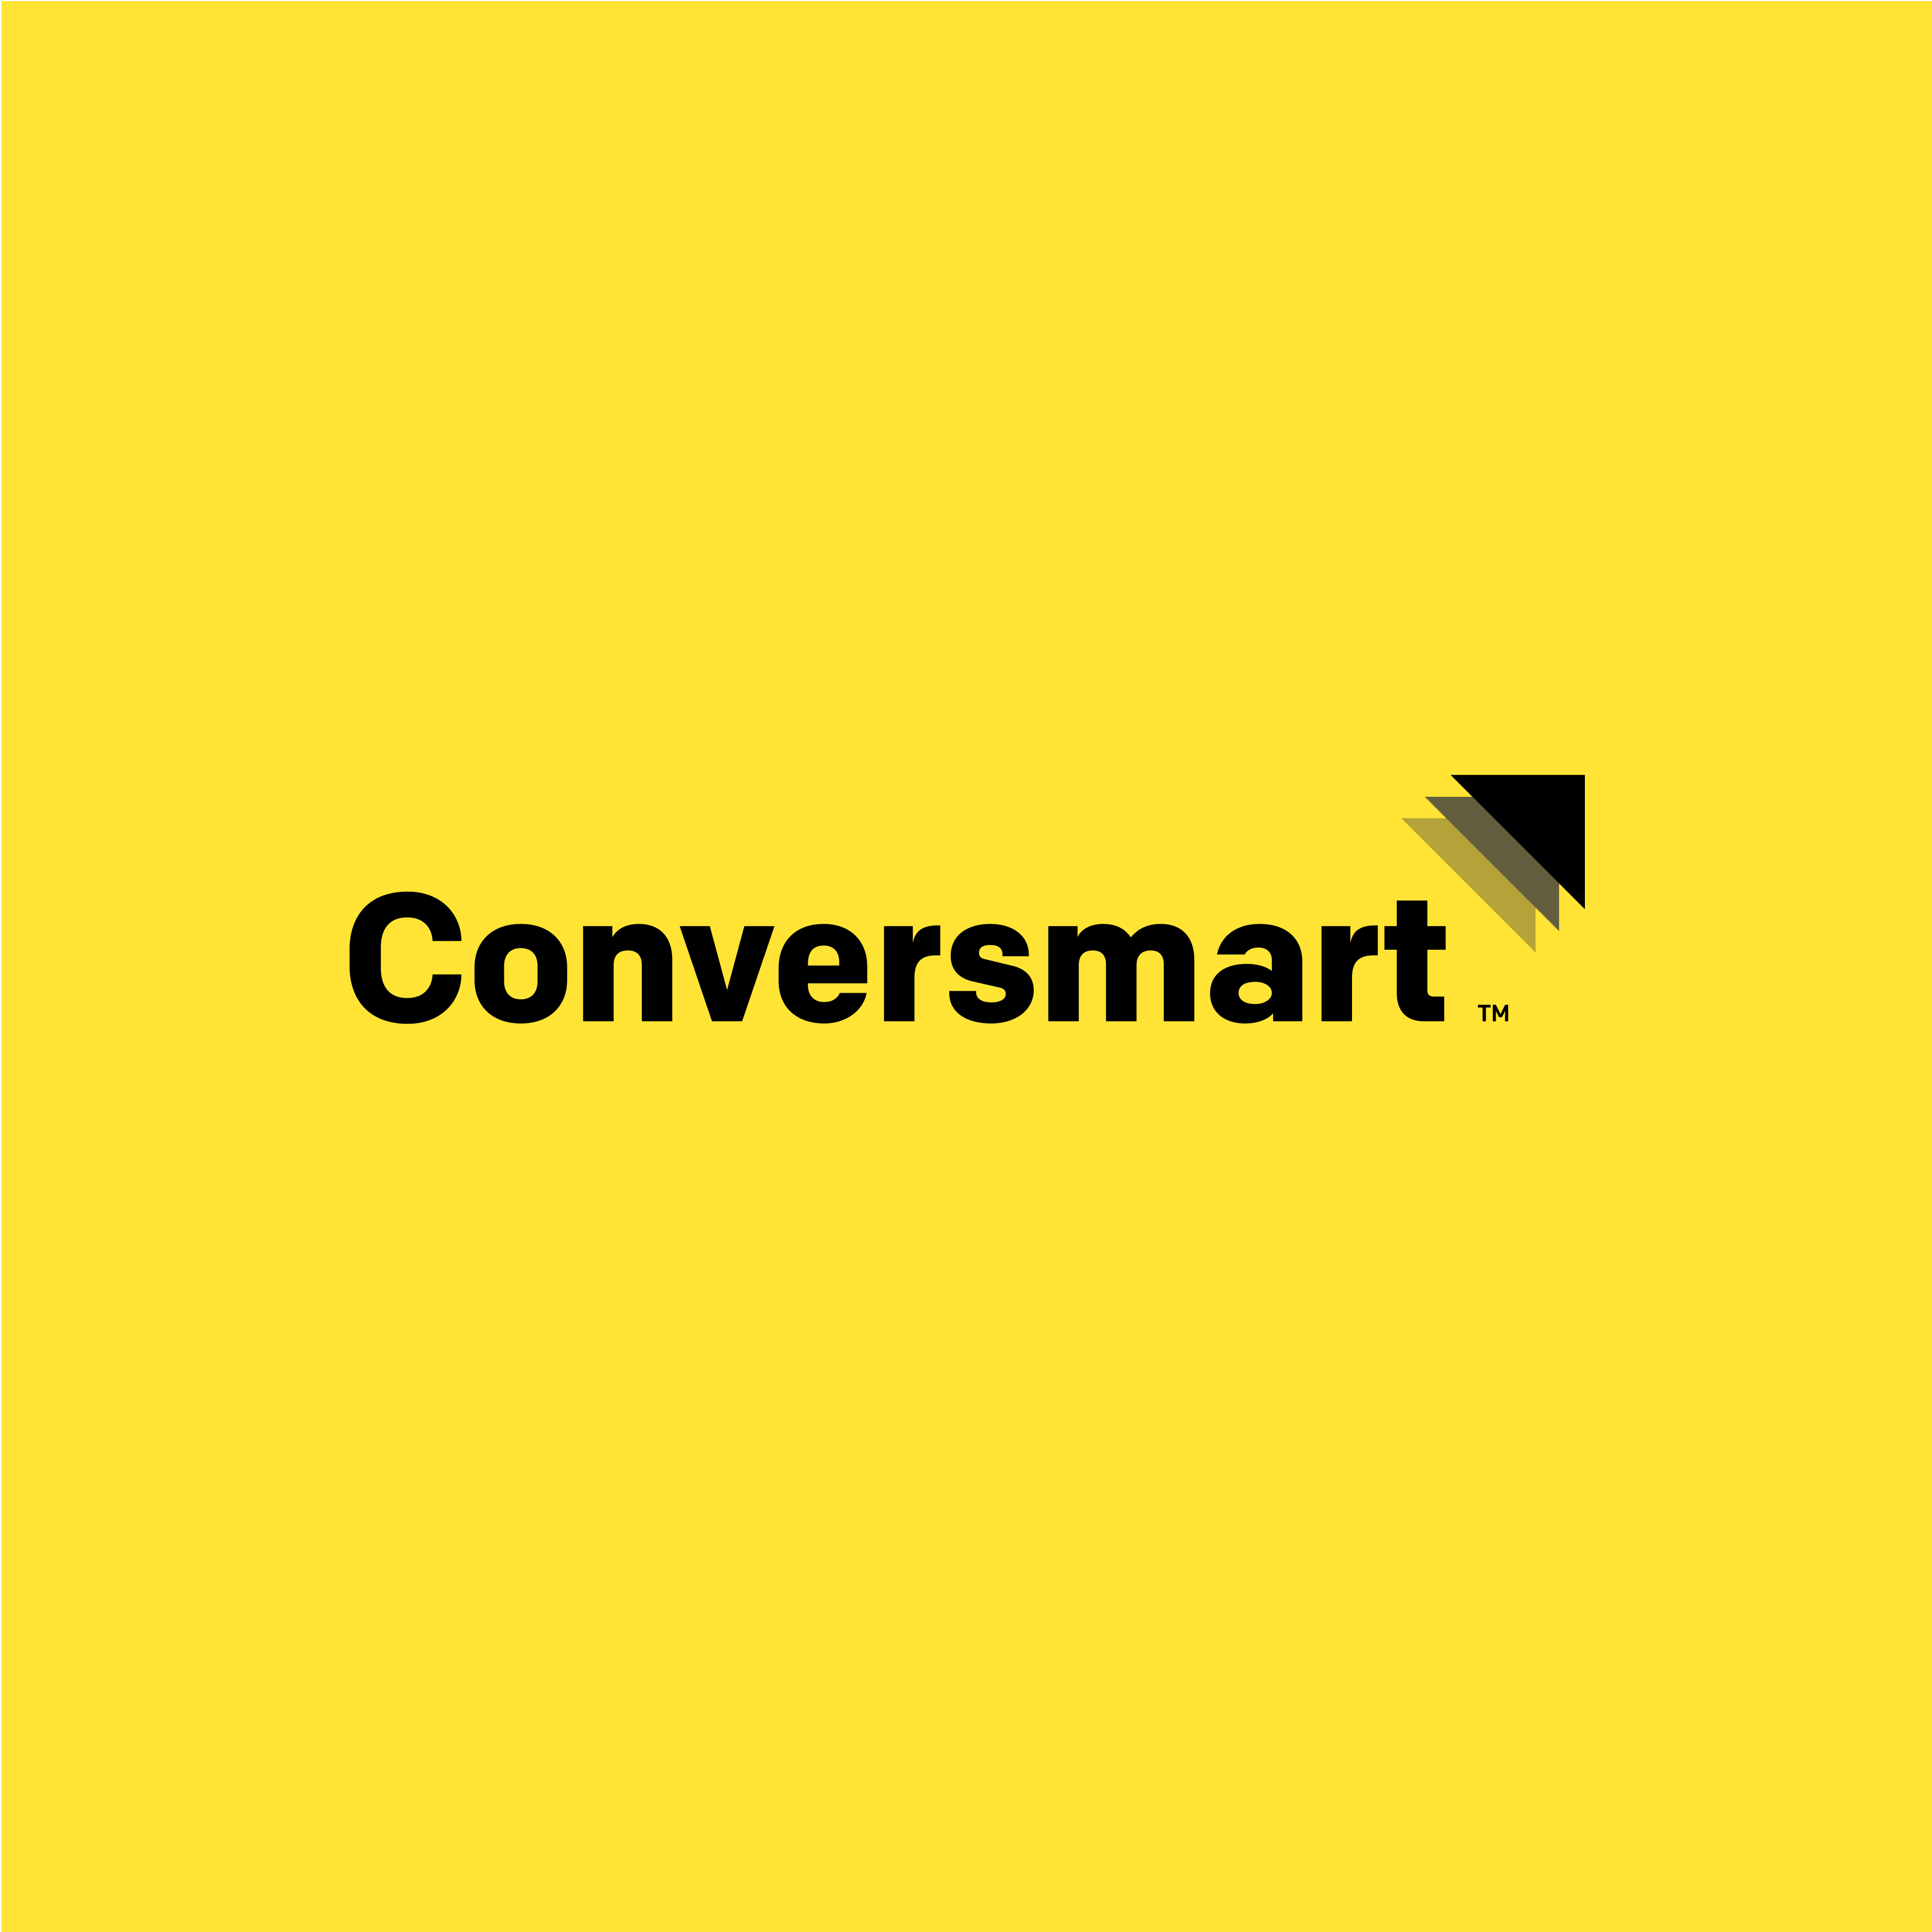 Conversmart